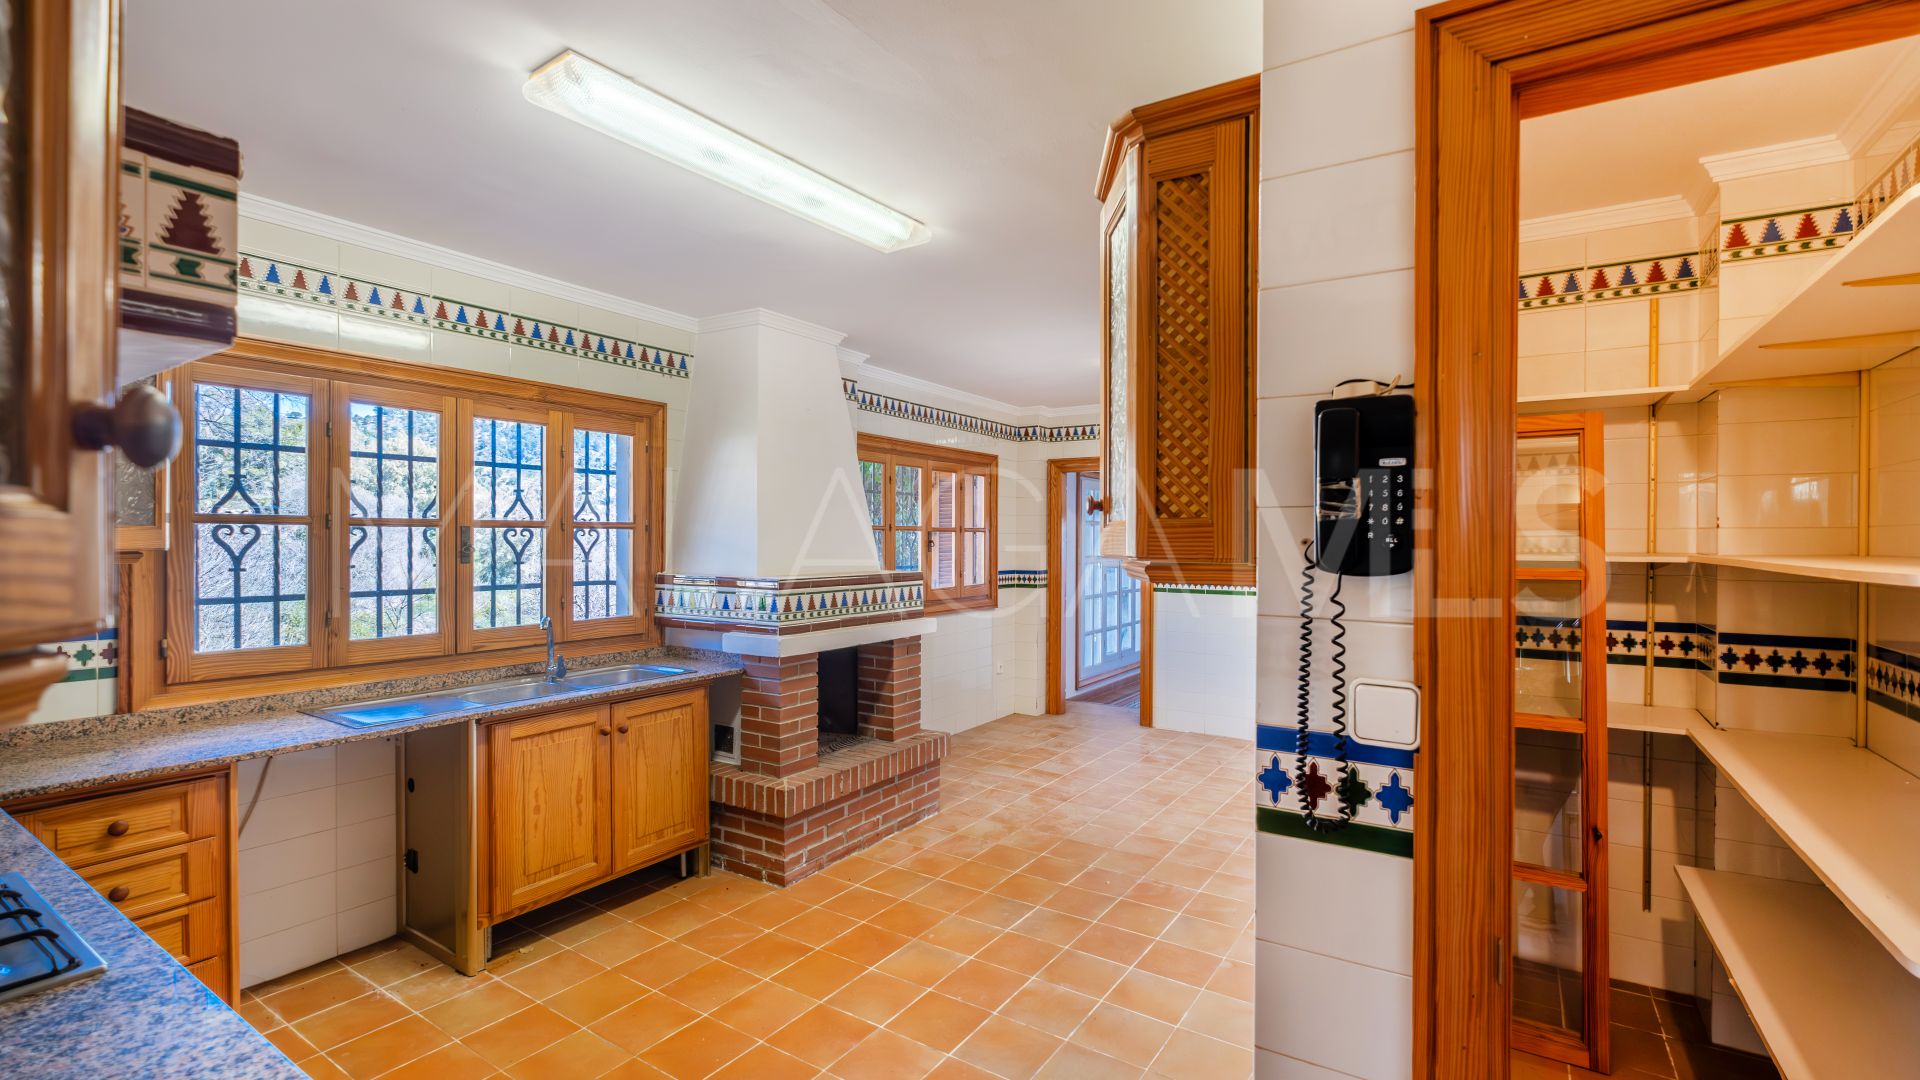 For sale villa with 9 bedrooms in Casarabonela